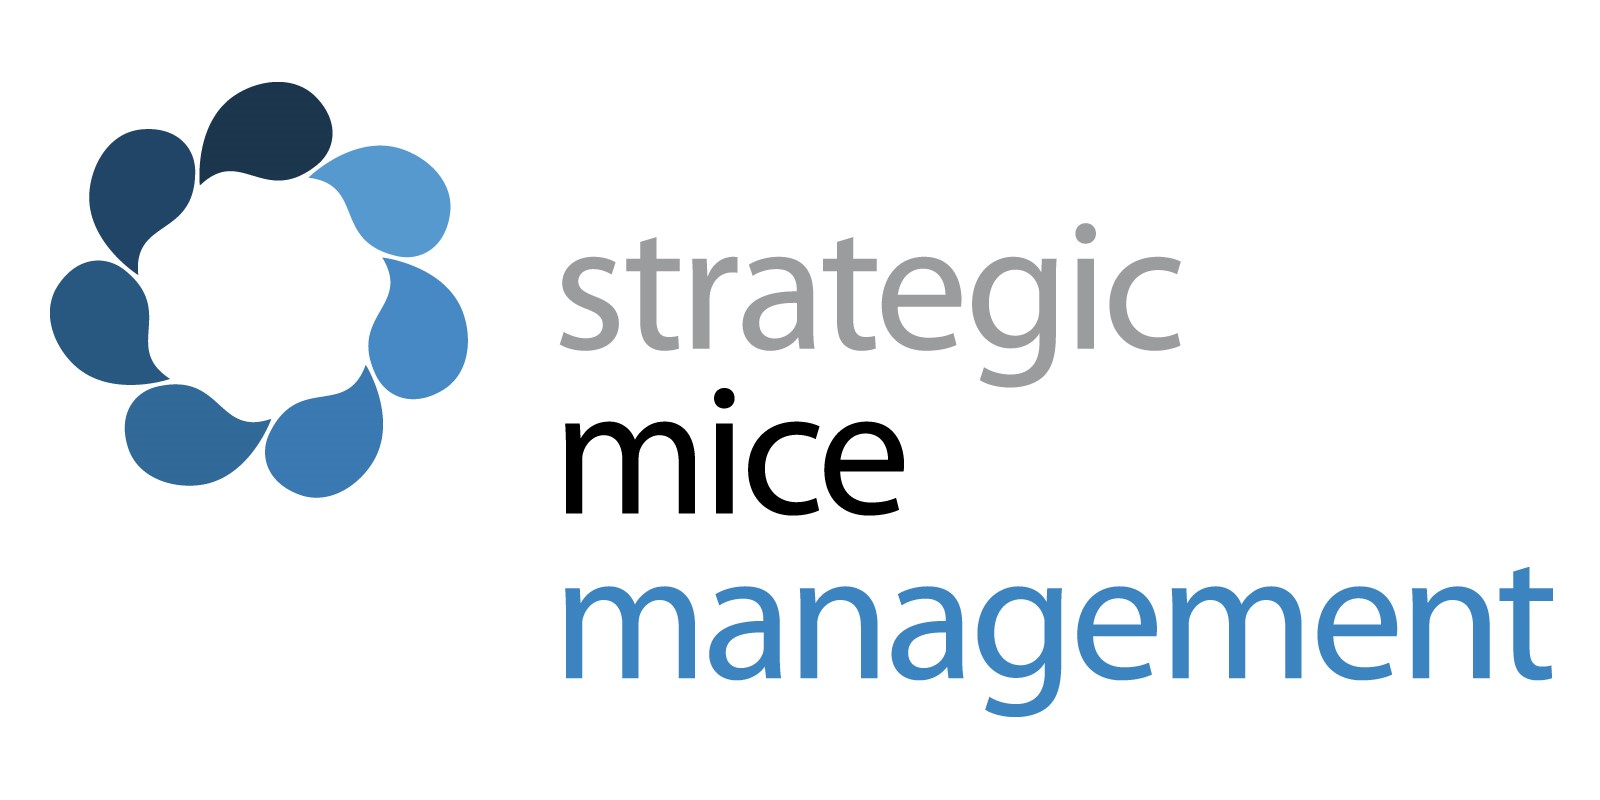 strategic mice management